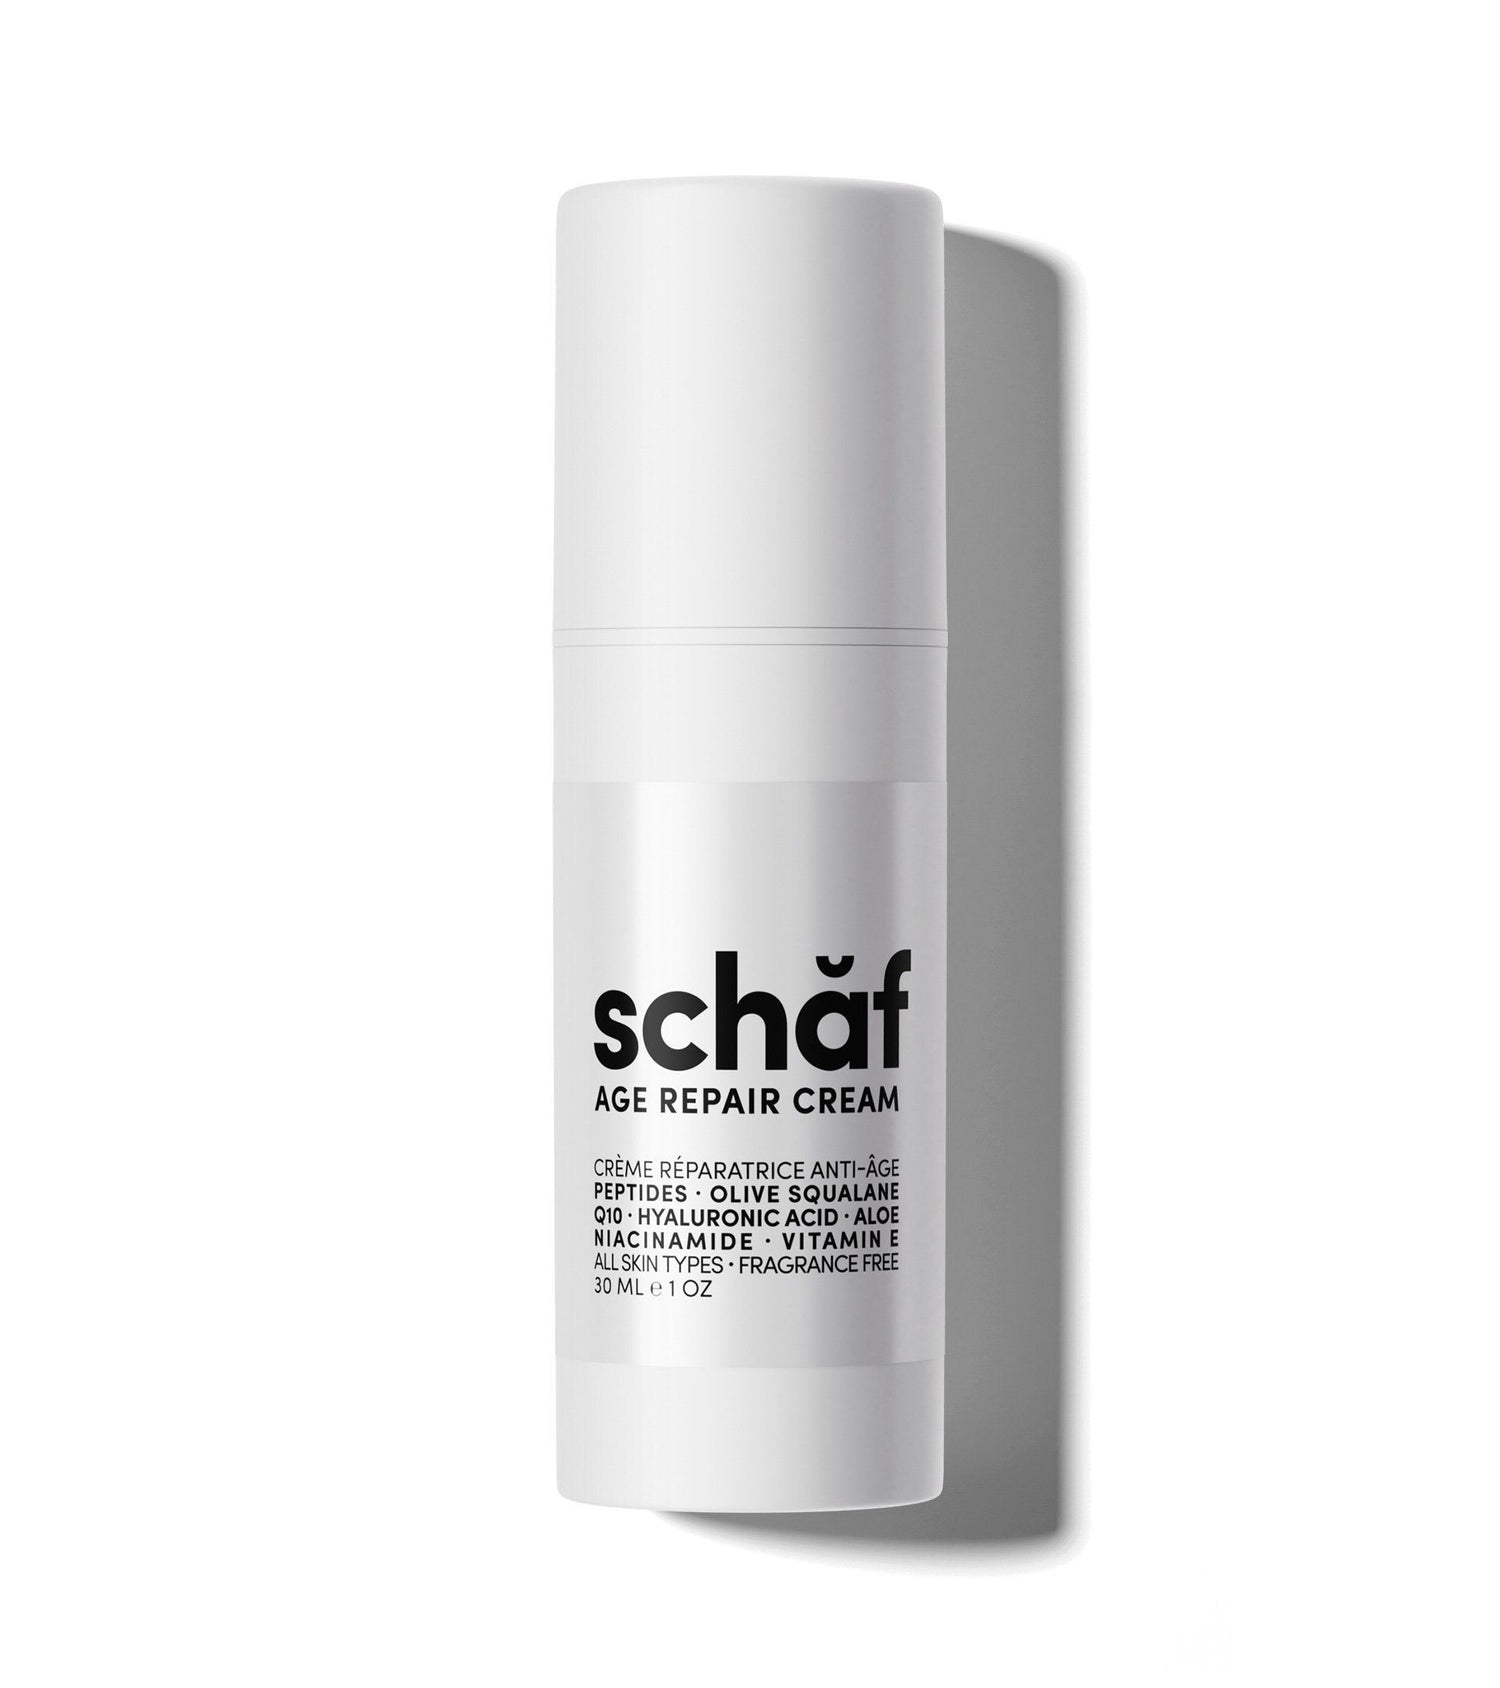 Schaf age repair cream fragrance free